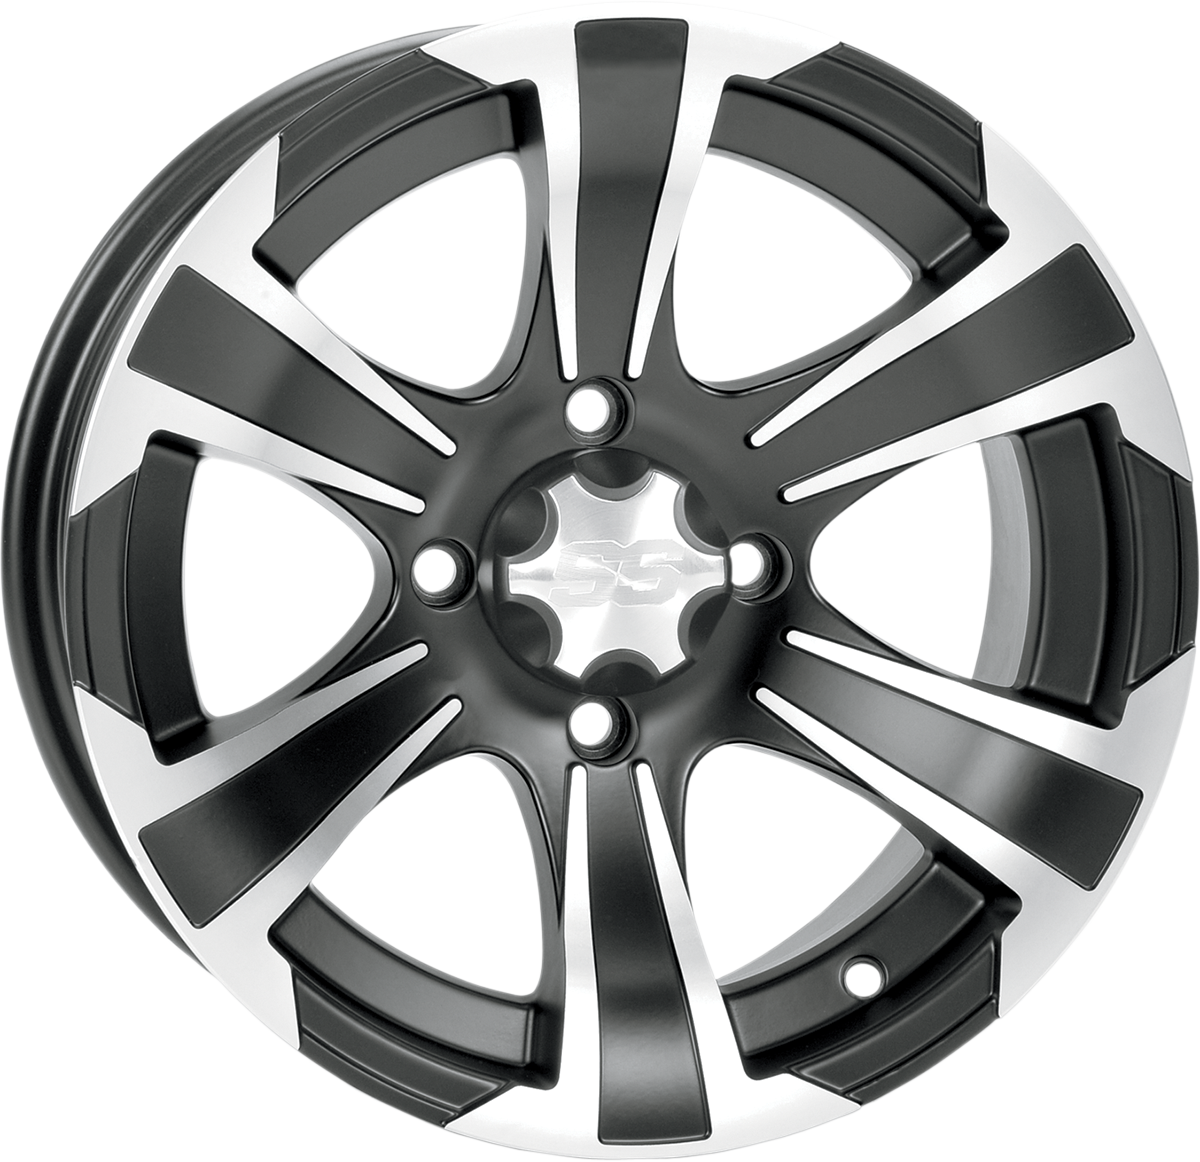 ITP SS312 Alloy Wheel - Rear - Black Machined - 14x8 - 4/156 - 5+3 1428449536B